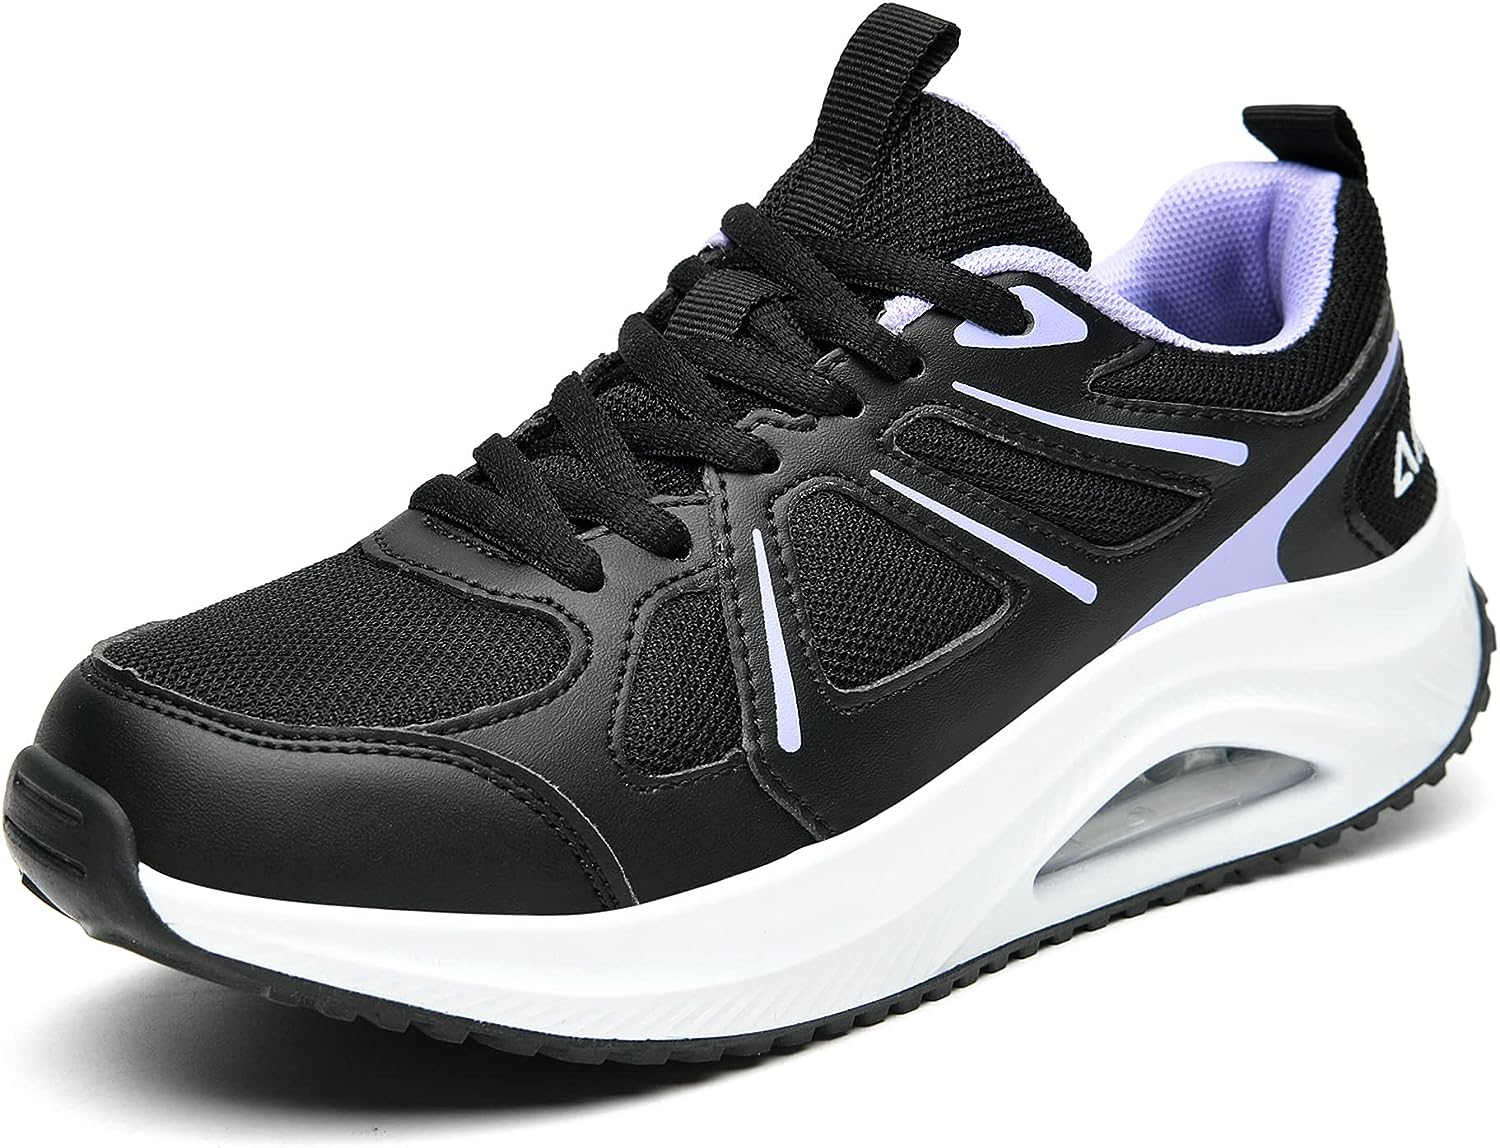 GANNOU Women's Air Walking Shoes Orthotic Tennis [...]